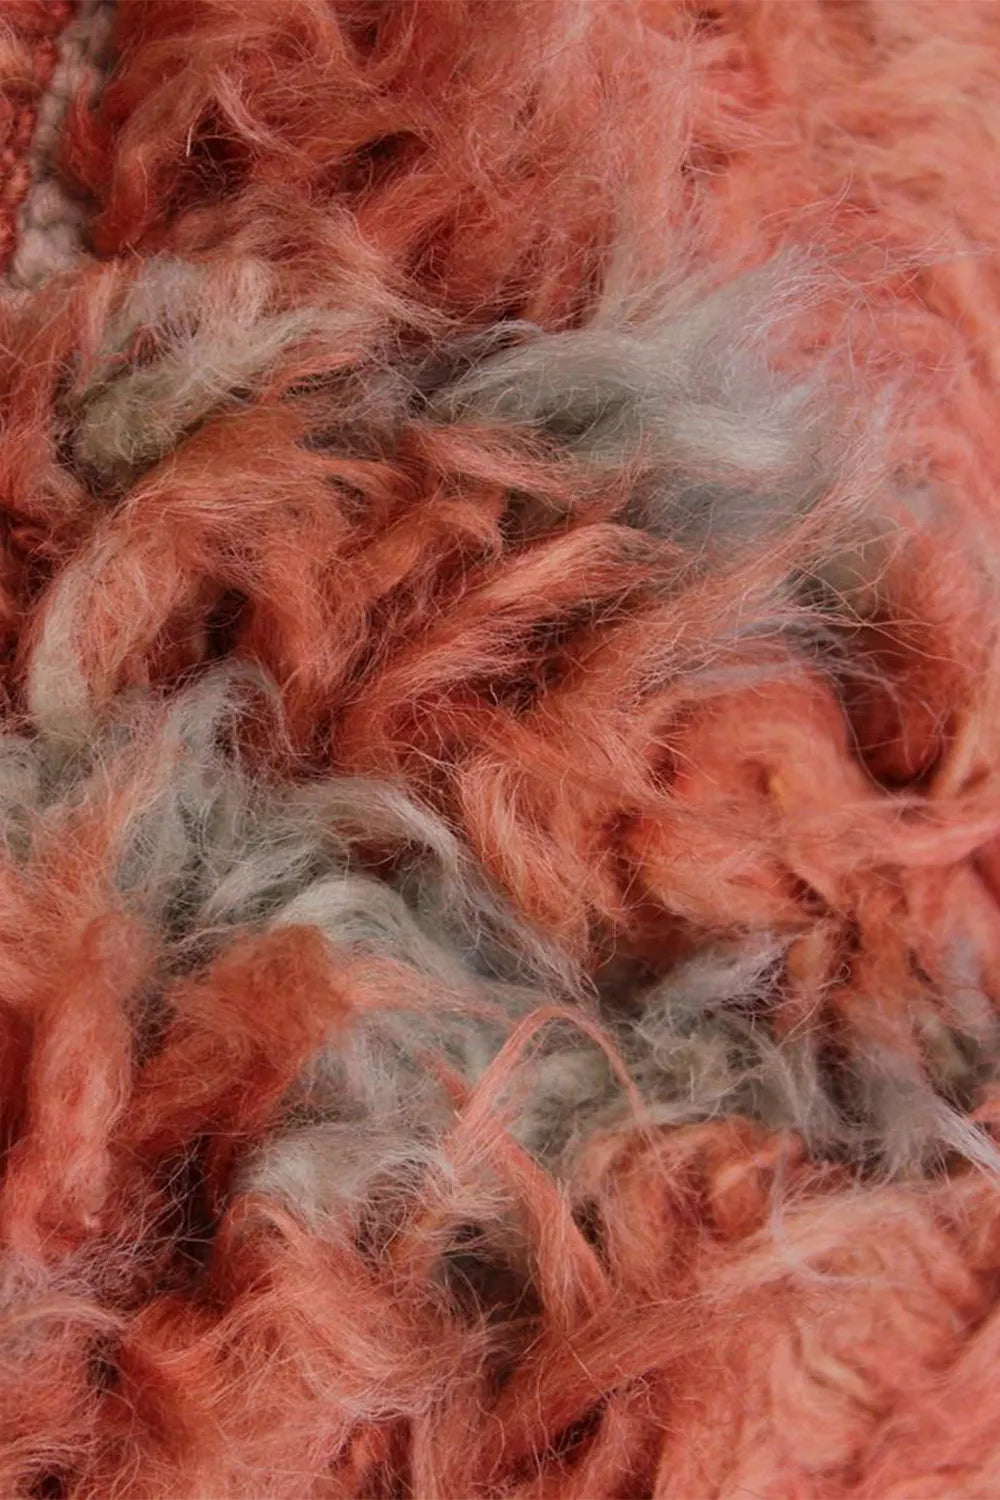 Luxurious soft wool orange shag rug, adding warmth and comfort underfoot.